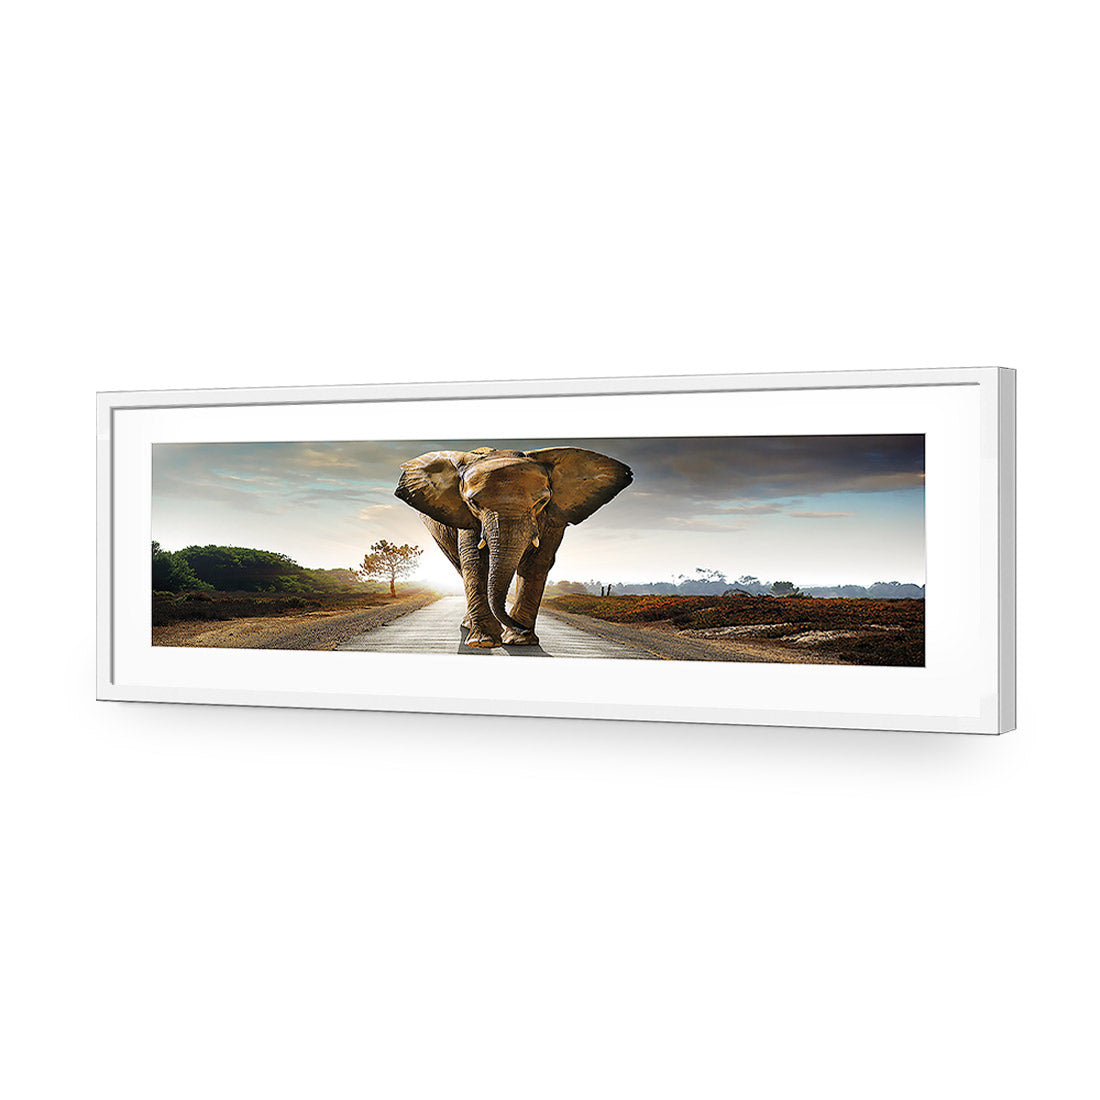 Determined Elephant, Long Acrylic Glass Art-Acrylic-Wall Art Design-With Border-Acrylic - White Frame-60x20cm-Wall Art Designs